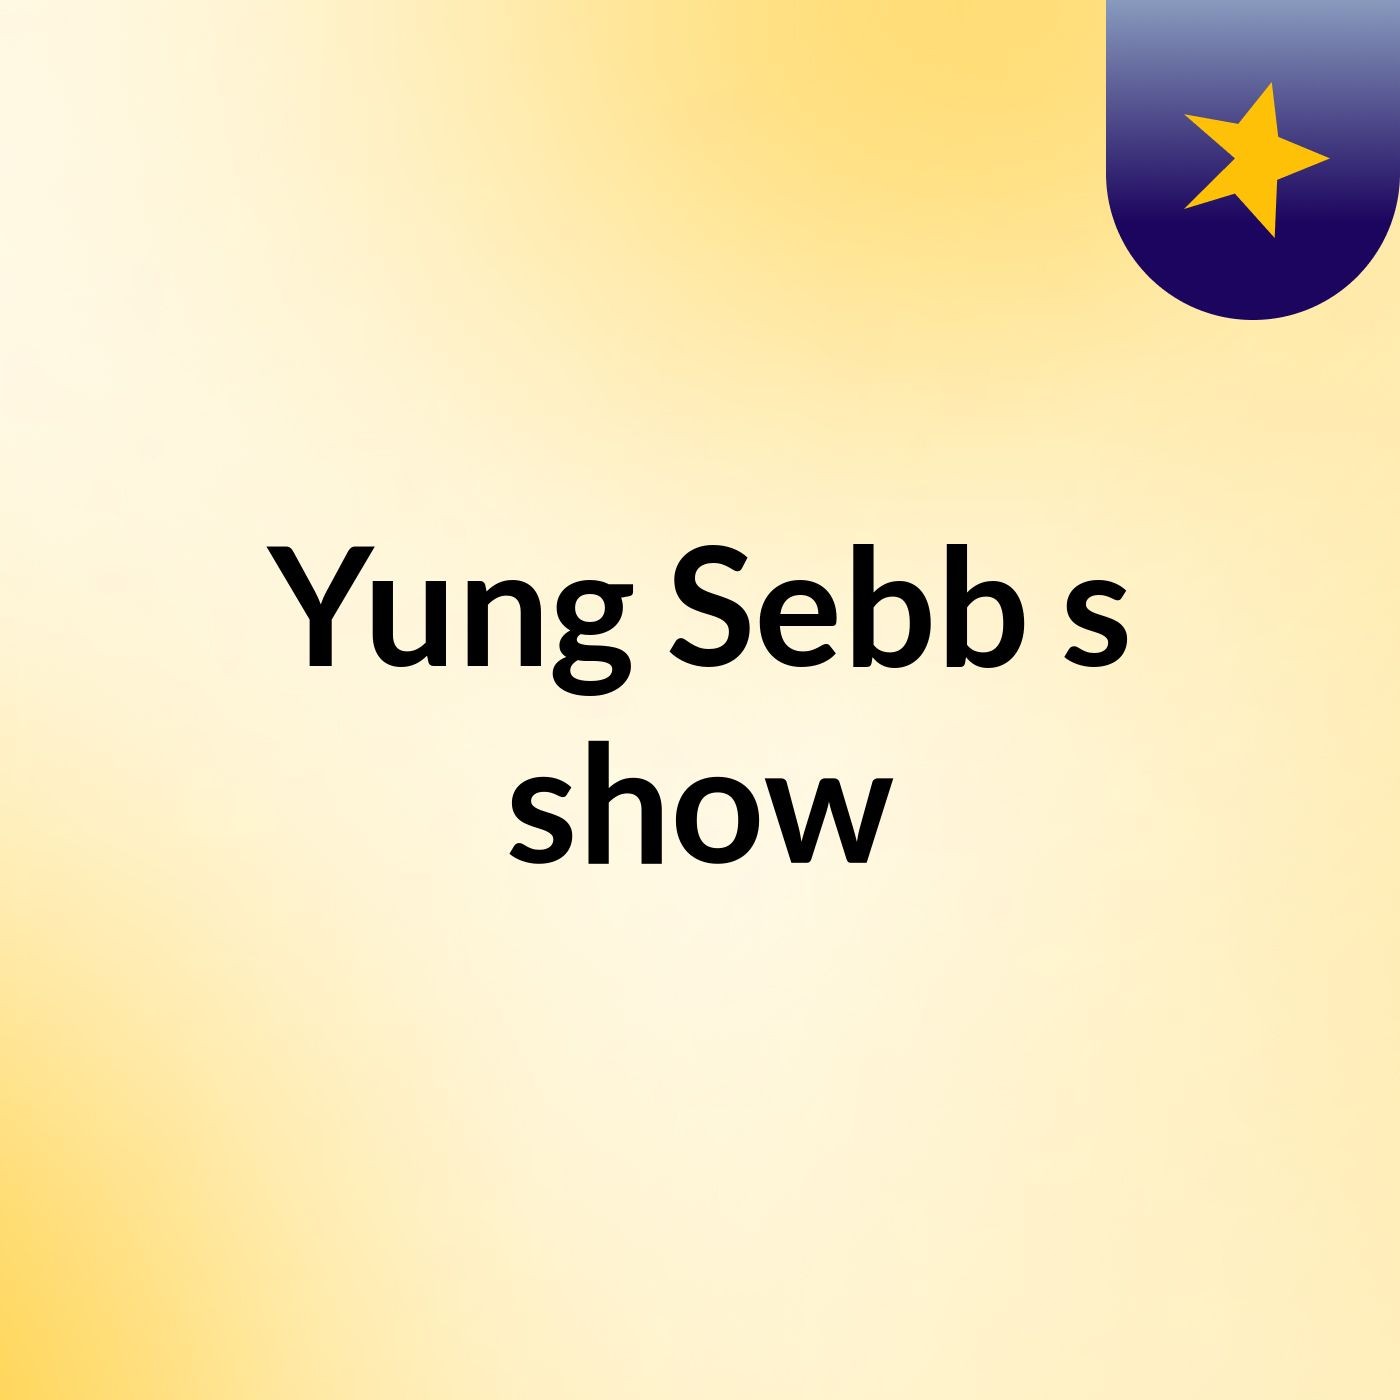 Yung Sebb's show